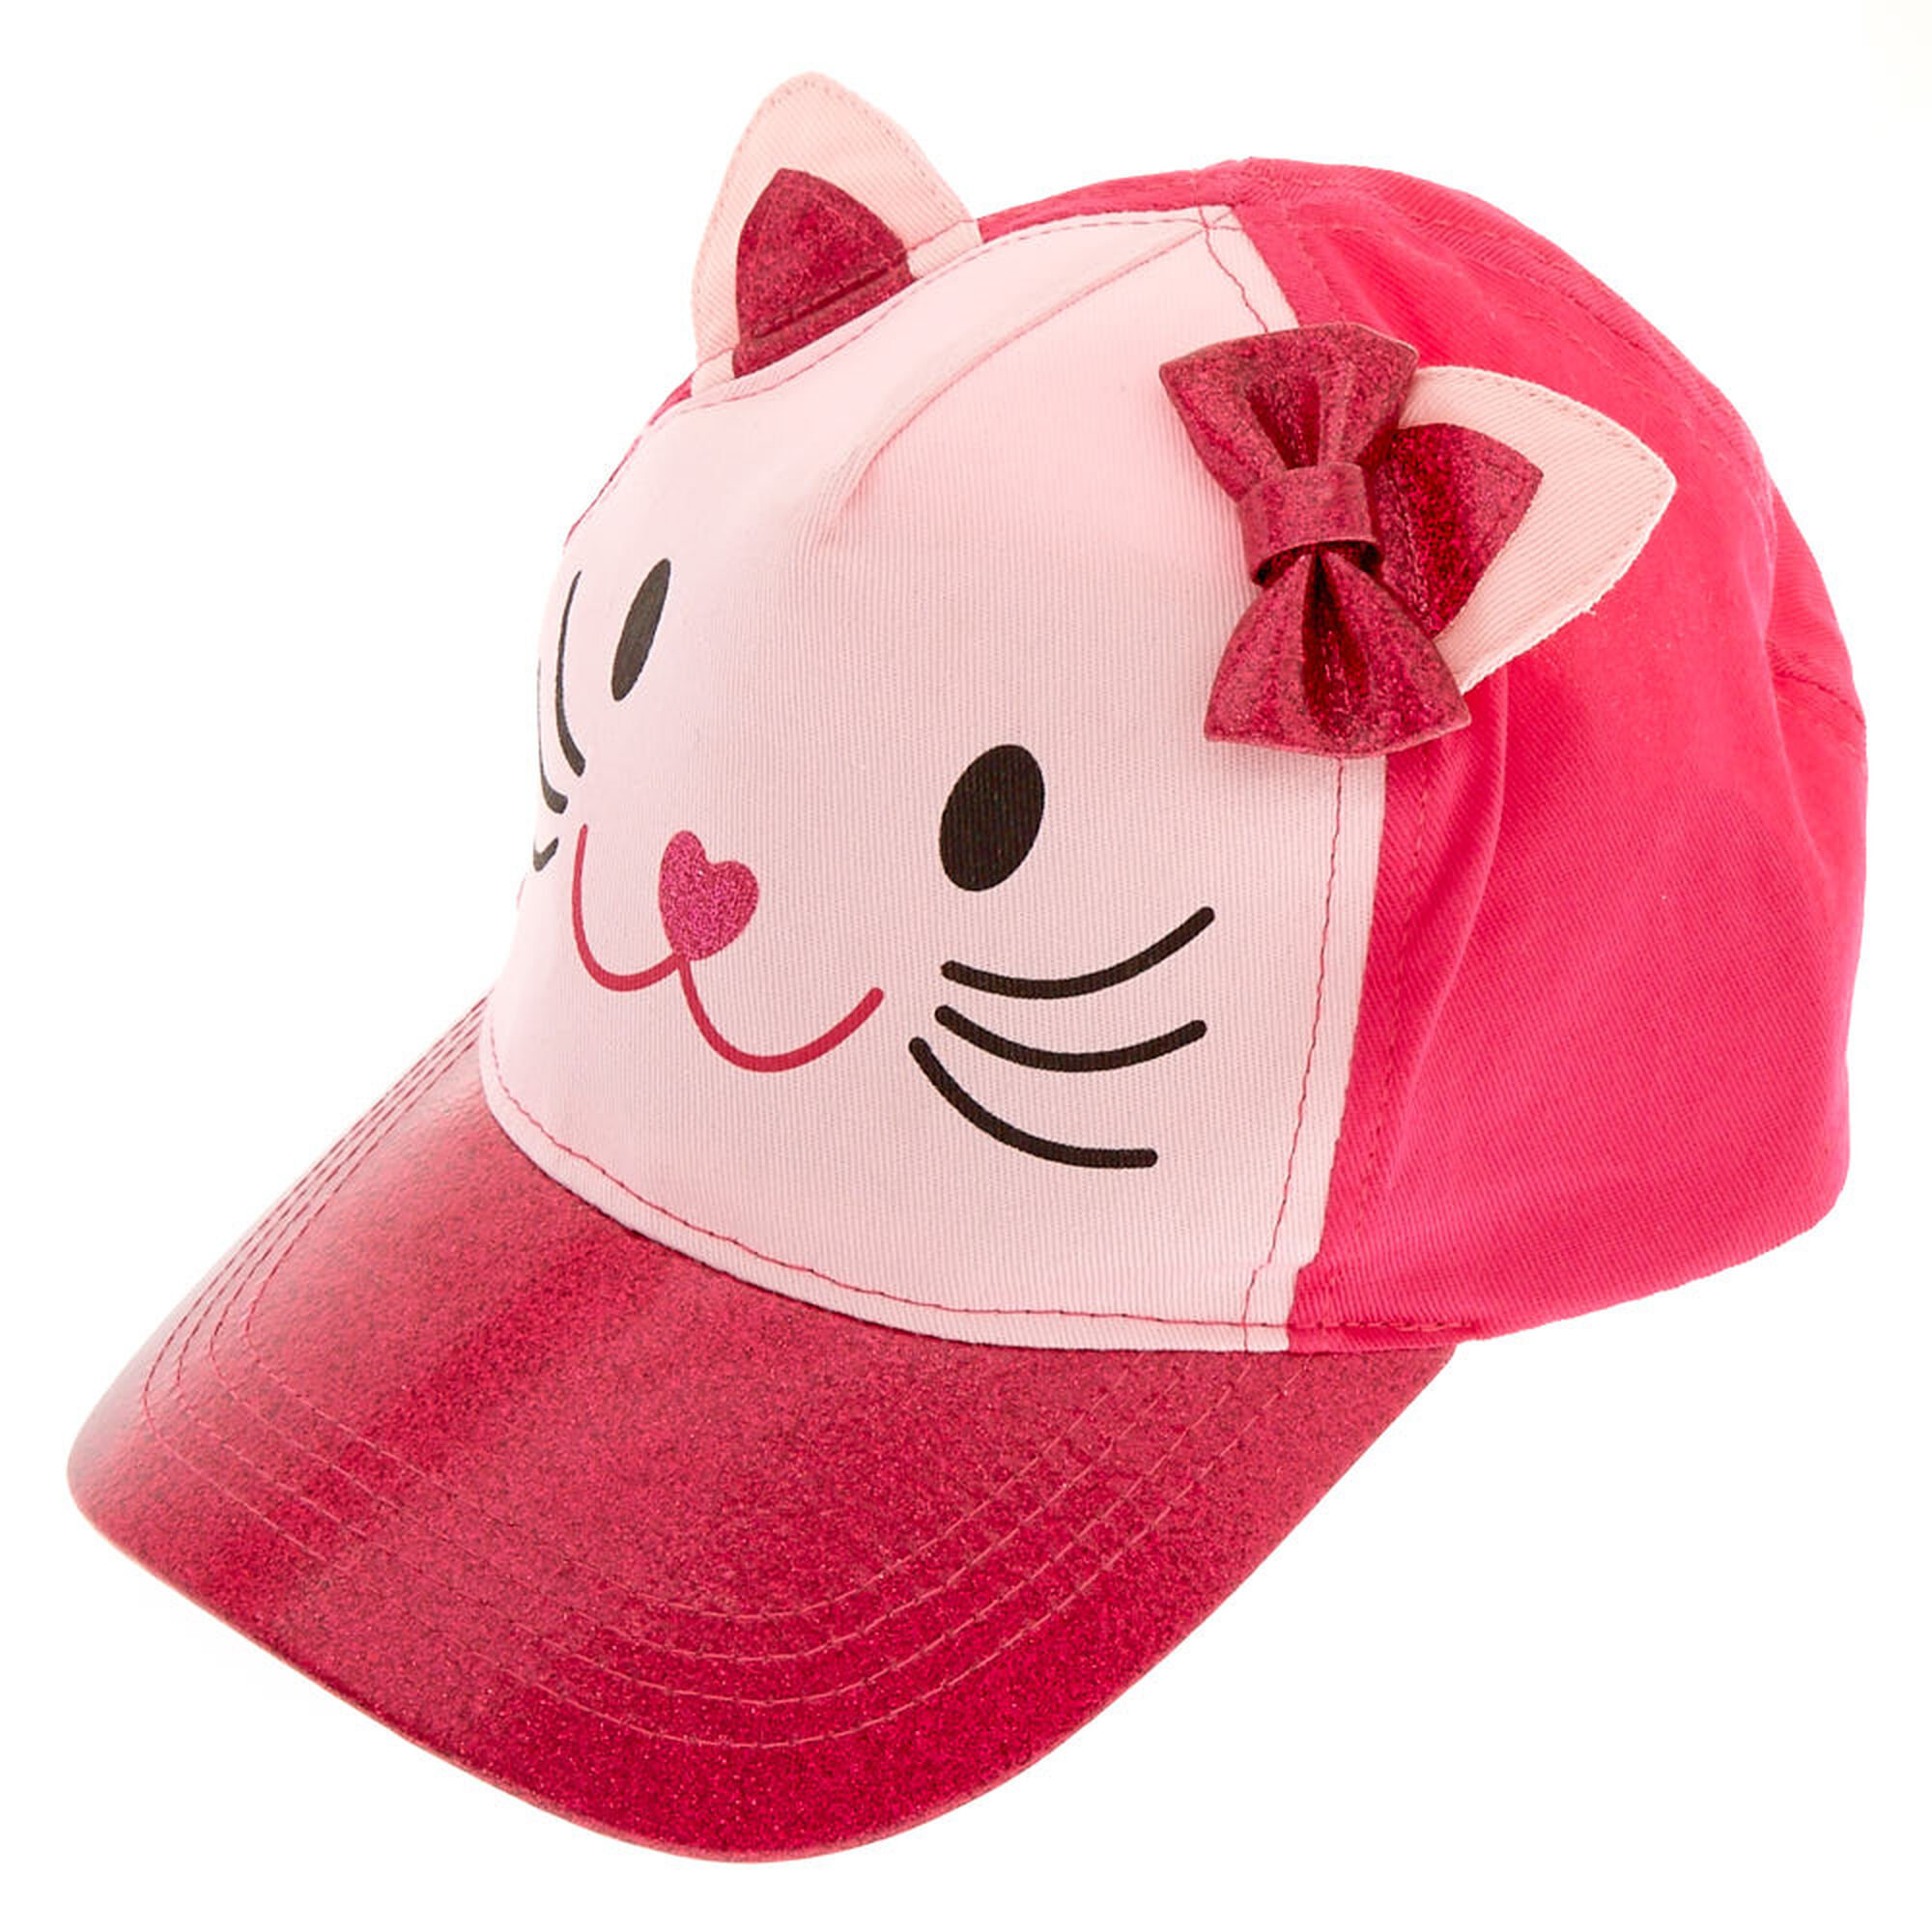 cat with baseball cap